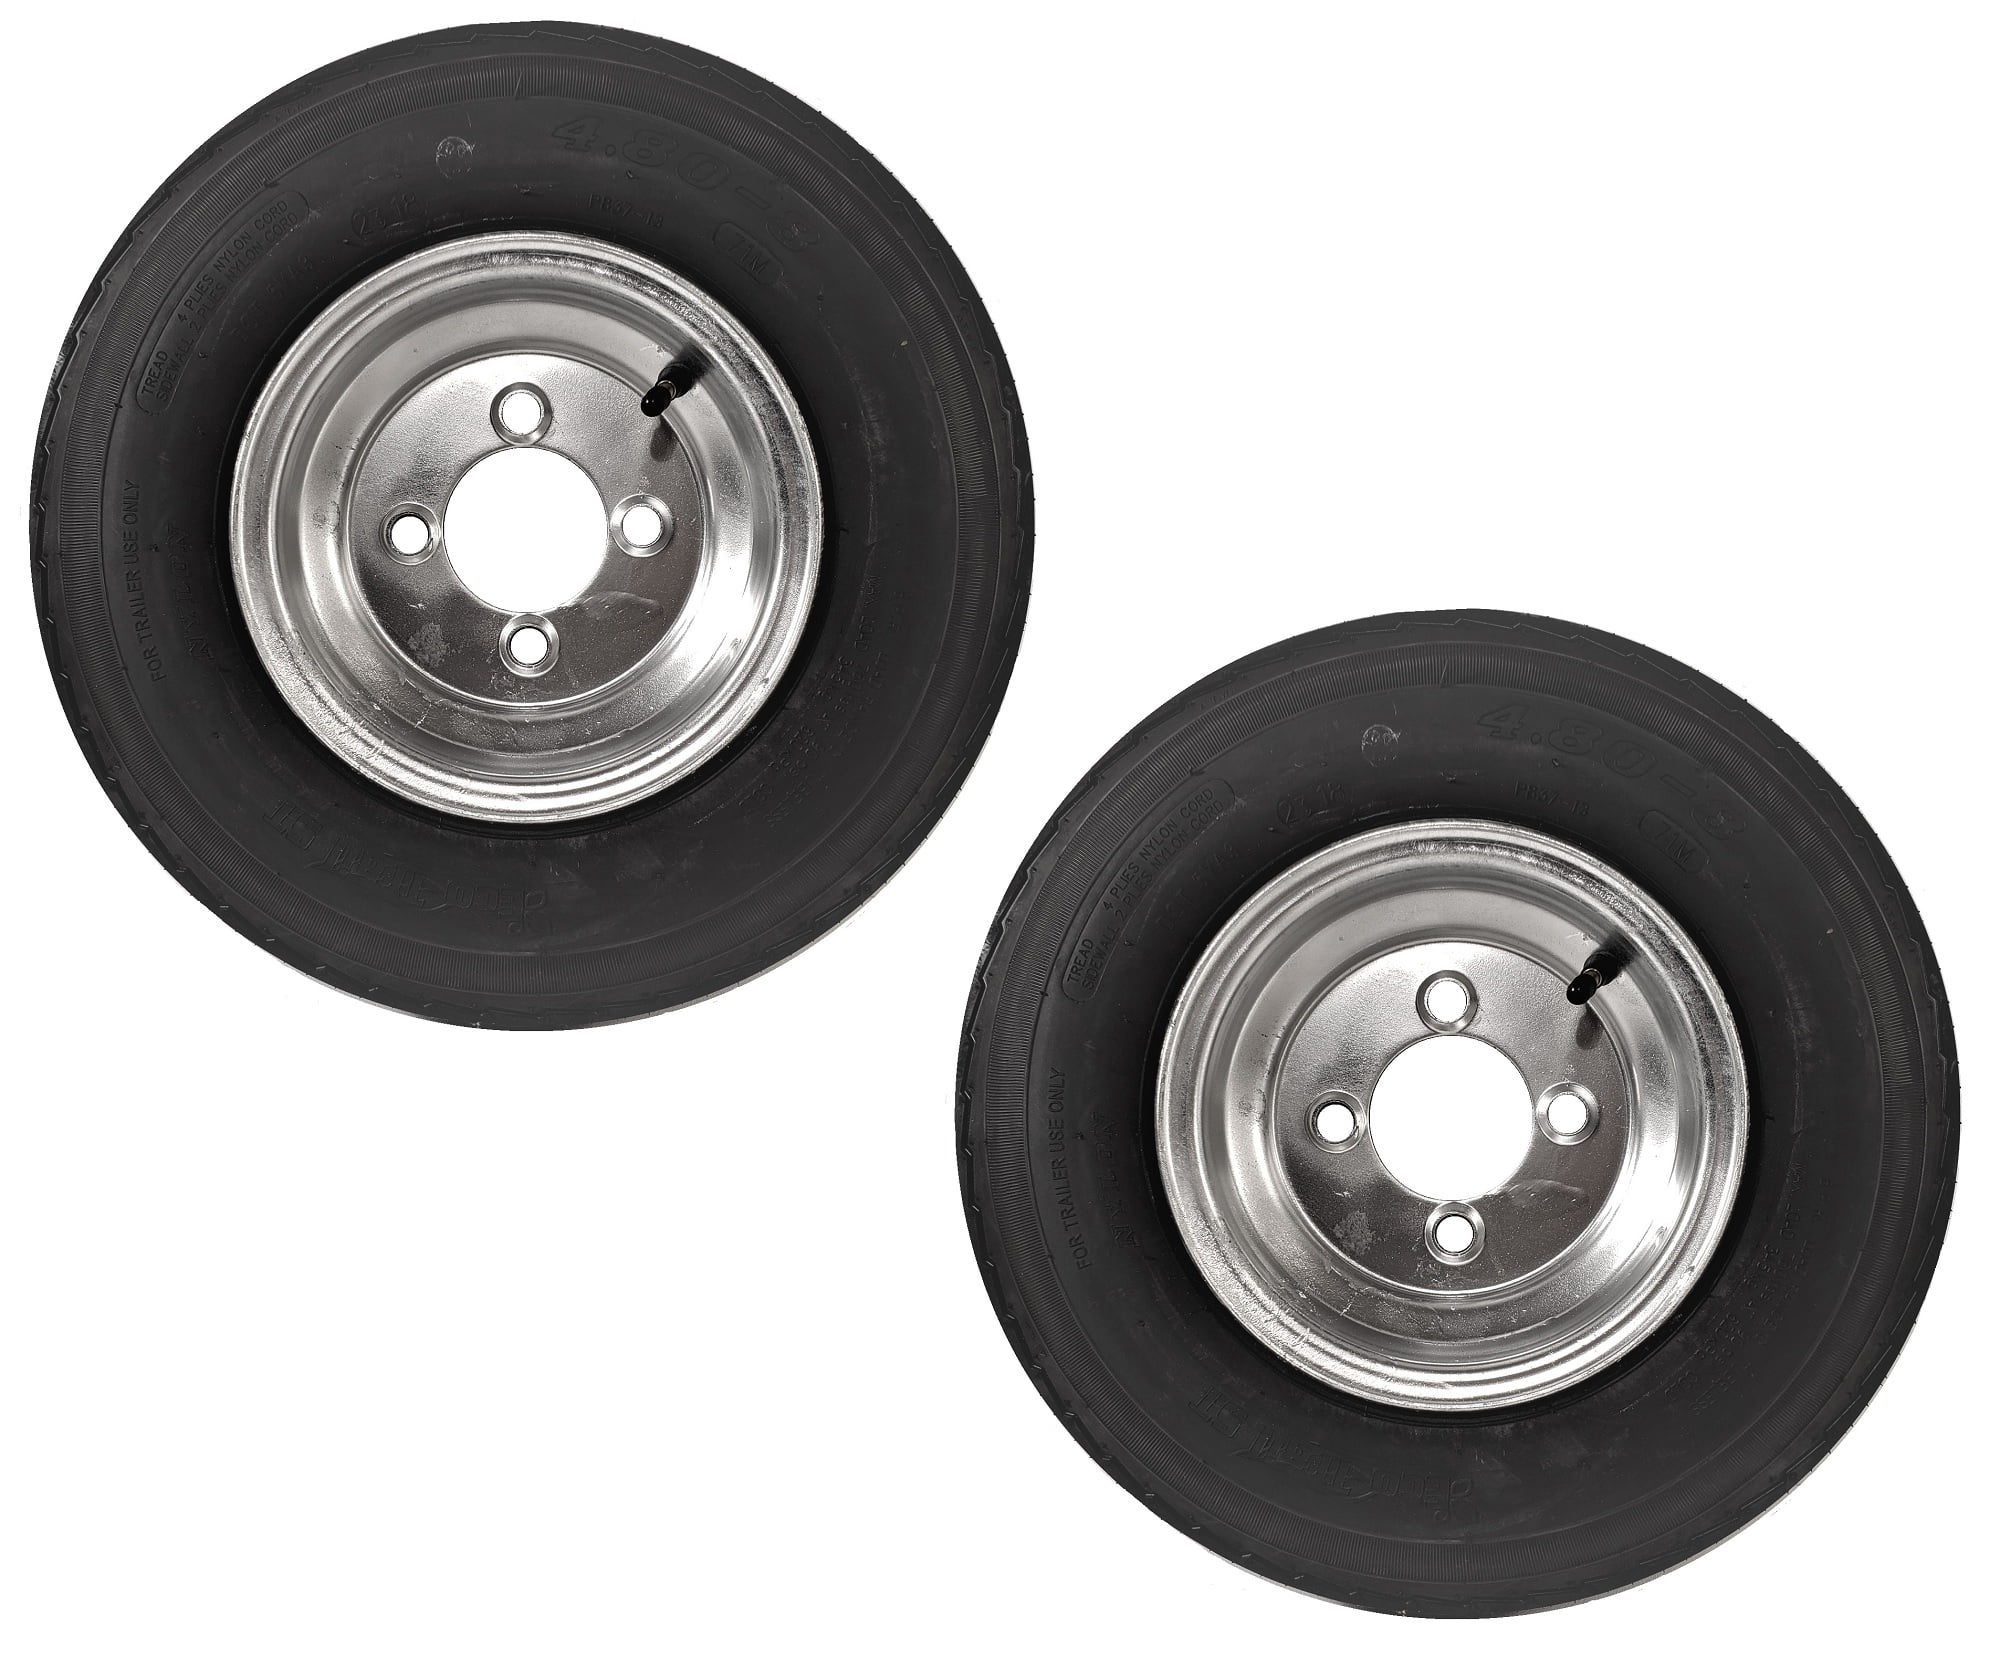 6 Ply 2-Pack Antego Trailer Tire On Rim 480-8 4.80-8 Load C 5 Lug Galvanized Wheel 